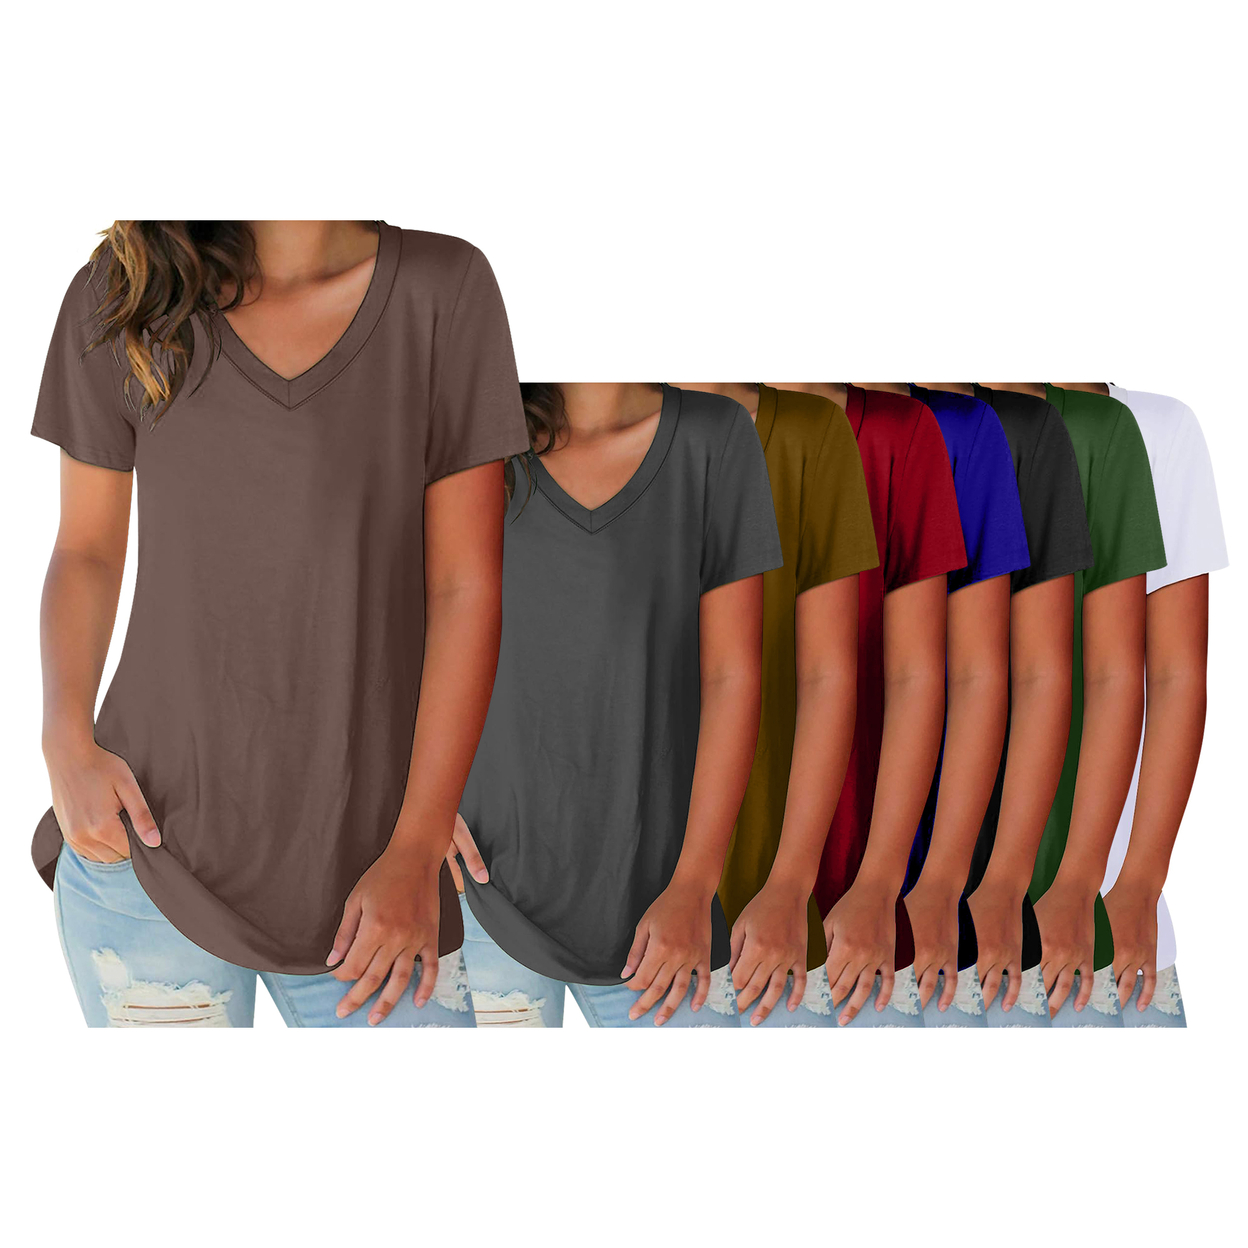 3-Pack: Women's Ultra Soft Smooth Cotton Blend Basic V-Neck Short Sleeve Shirts - Black, Grey Mustard, Medium